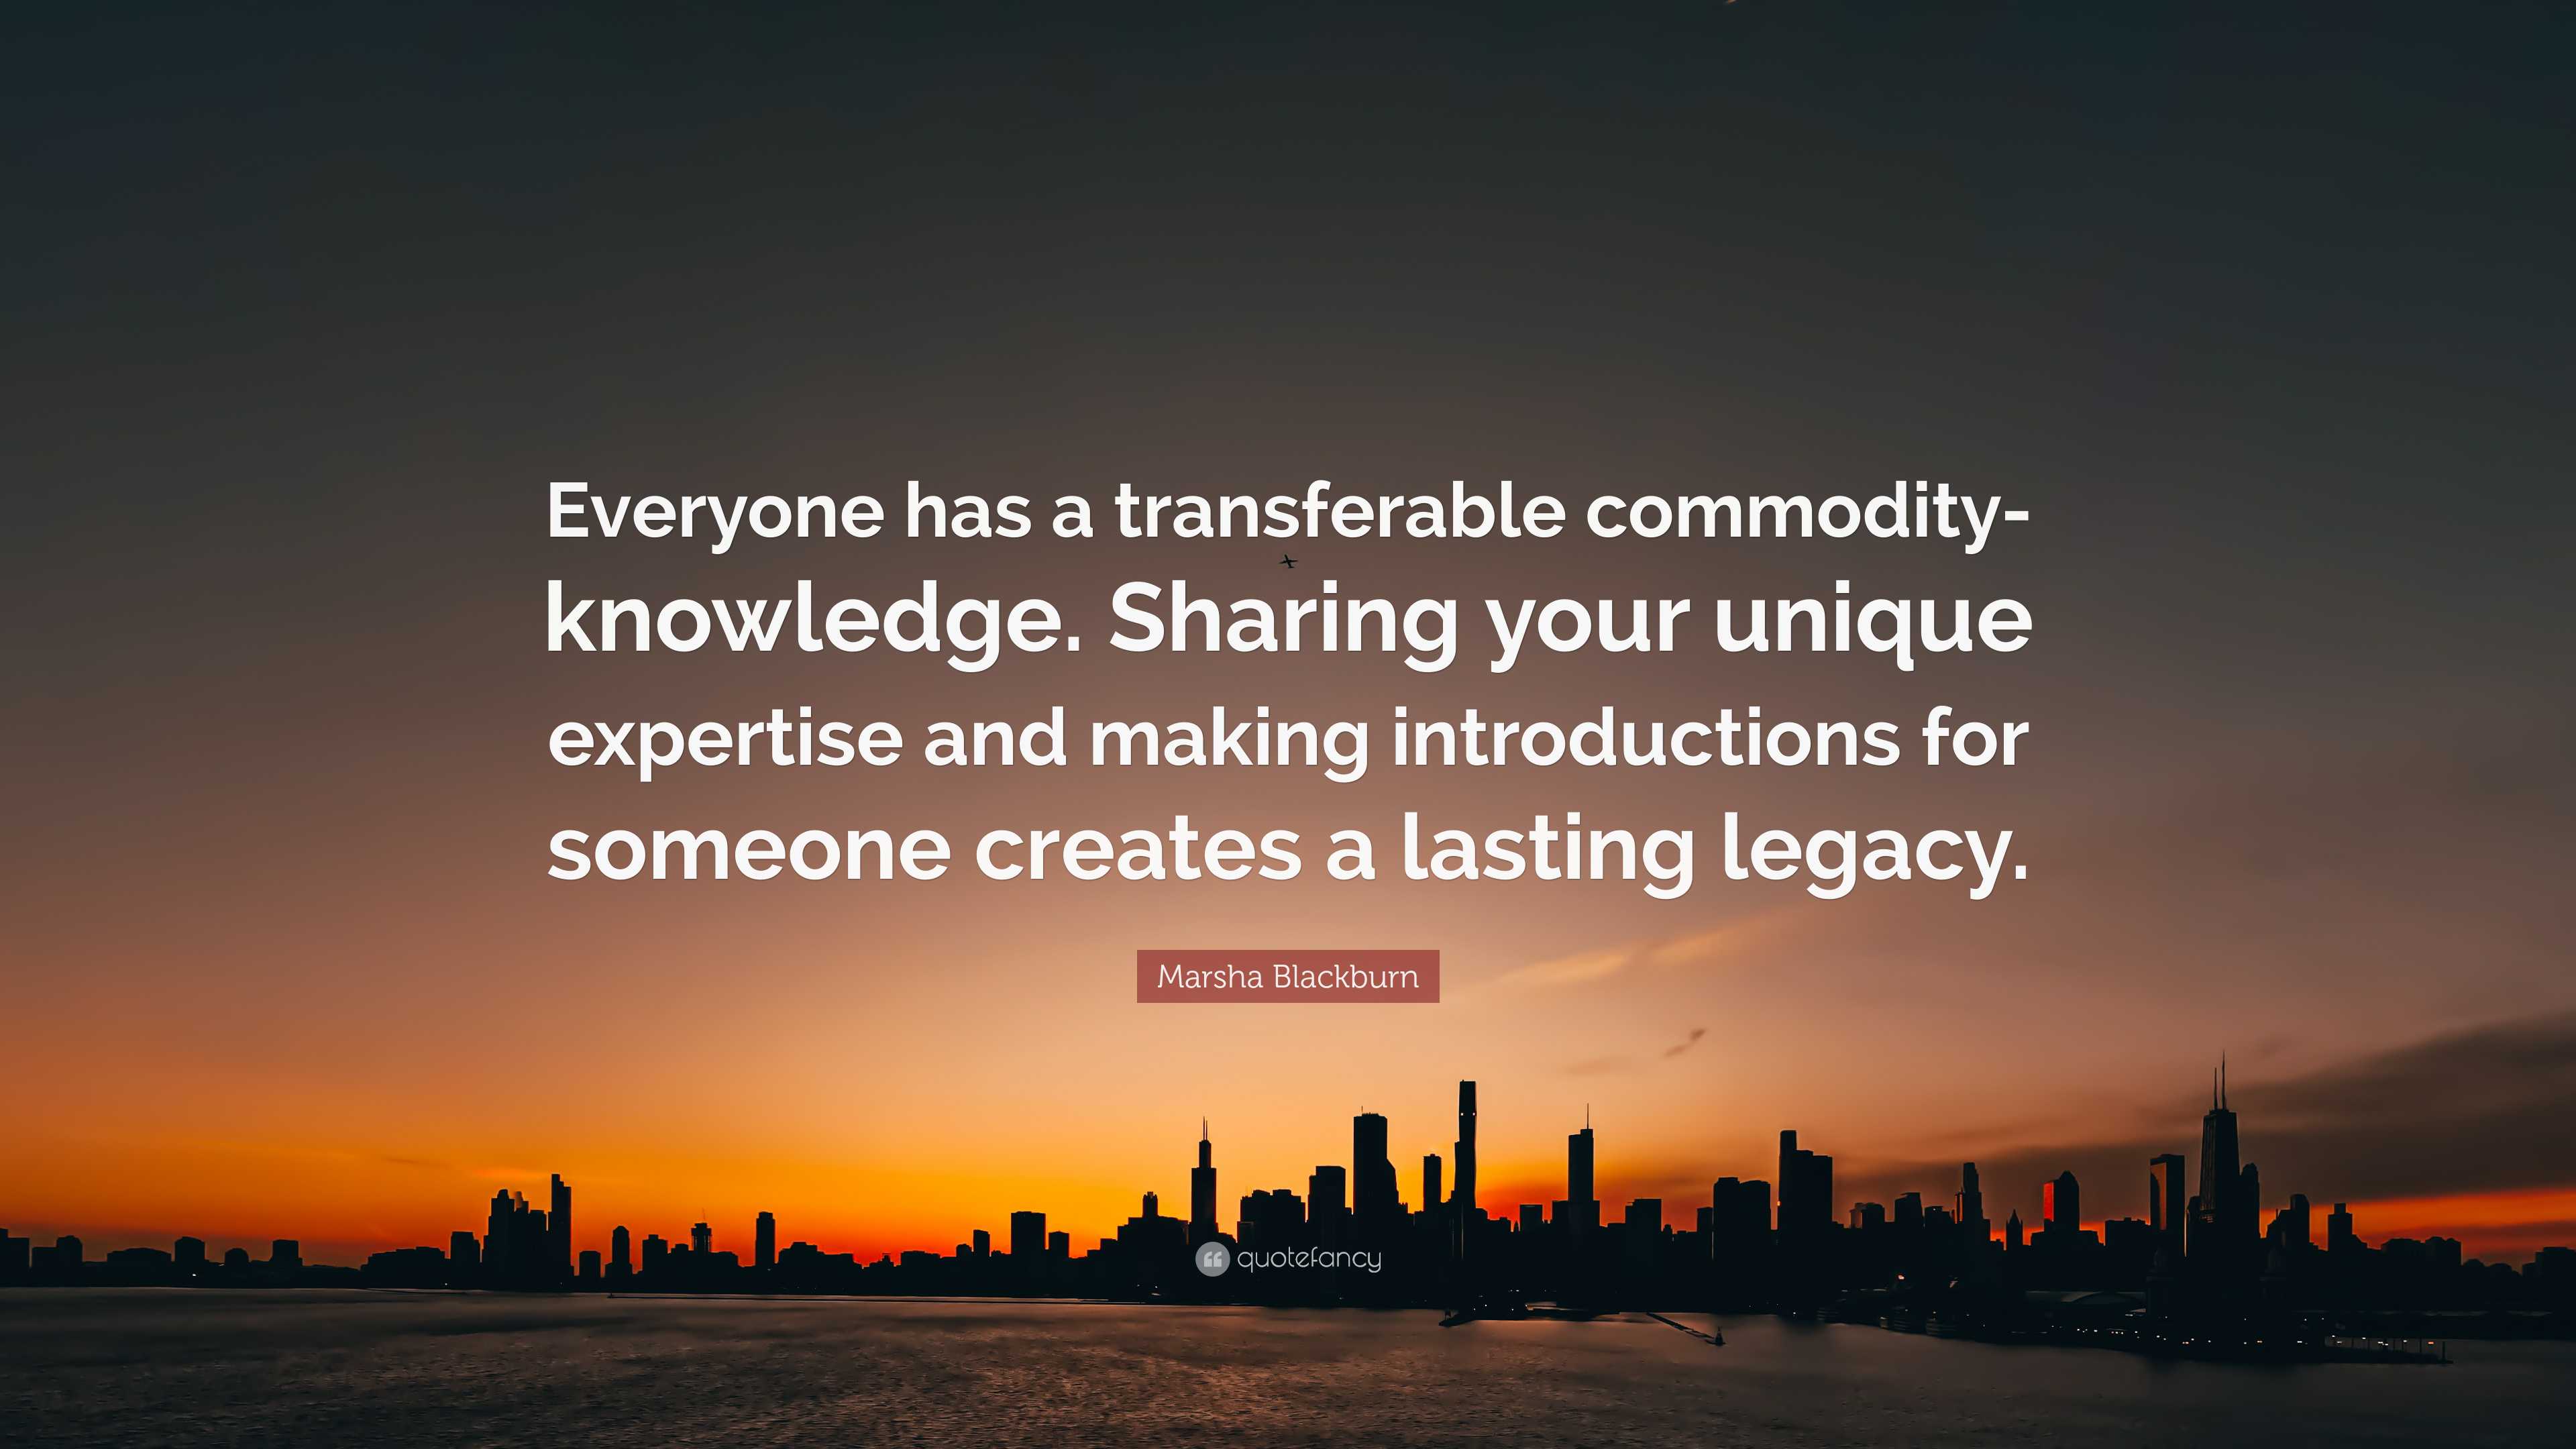 Marsha Blackburn Quote: “Everyone has a transferable commodity ...